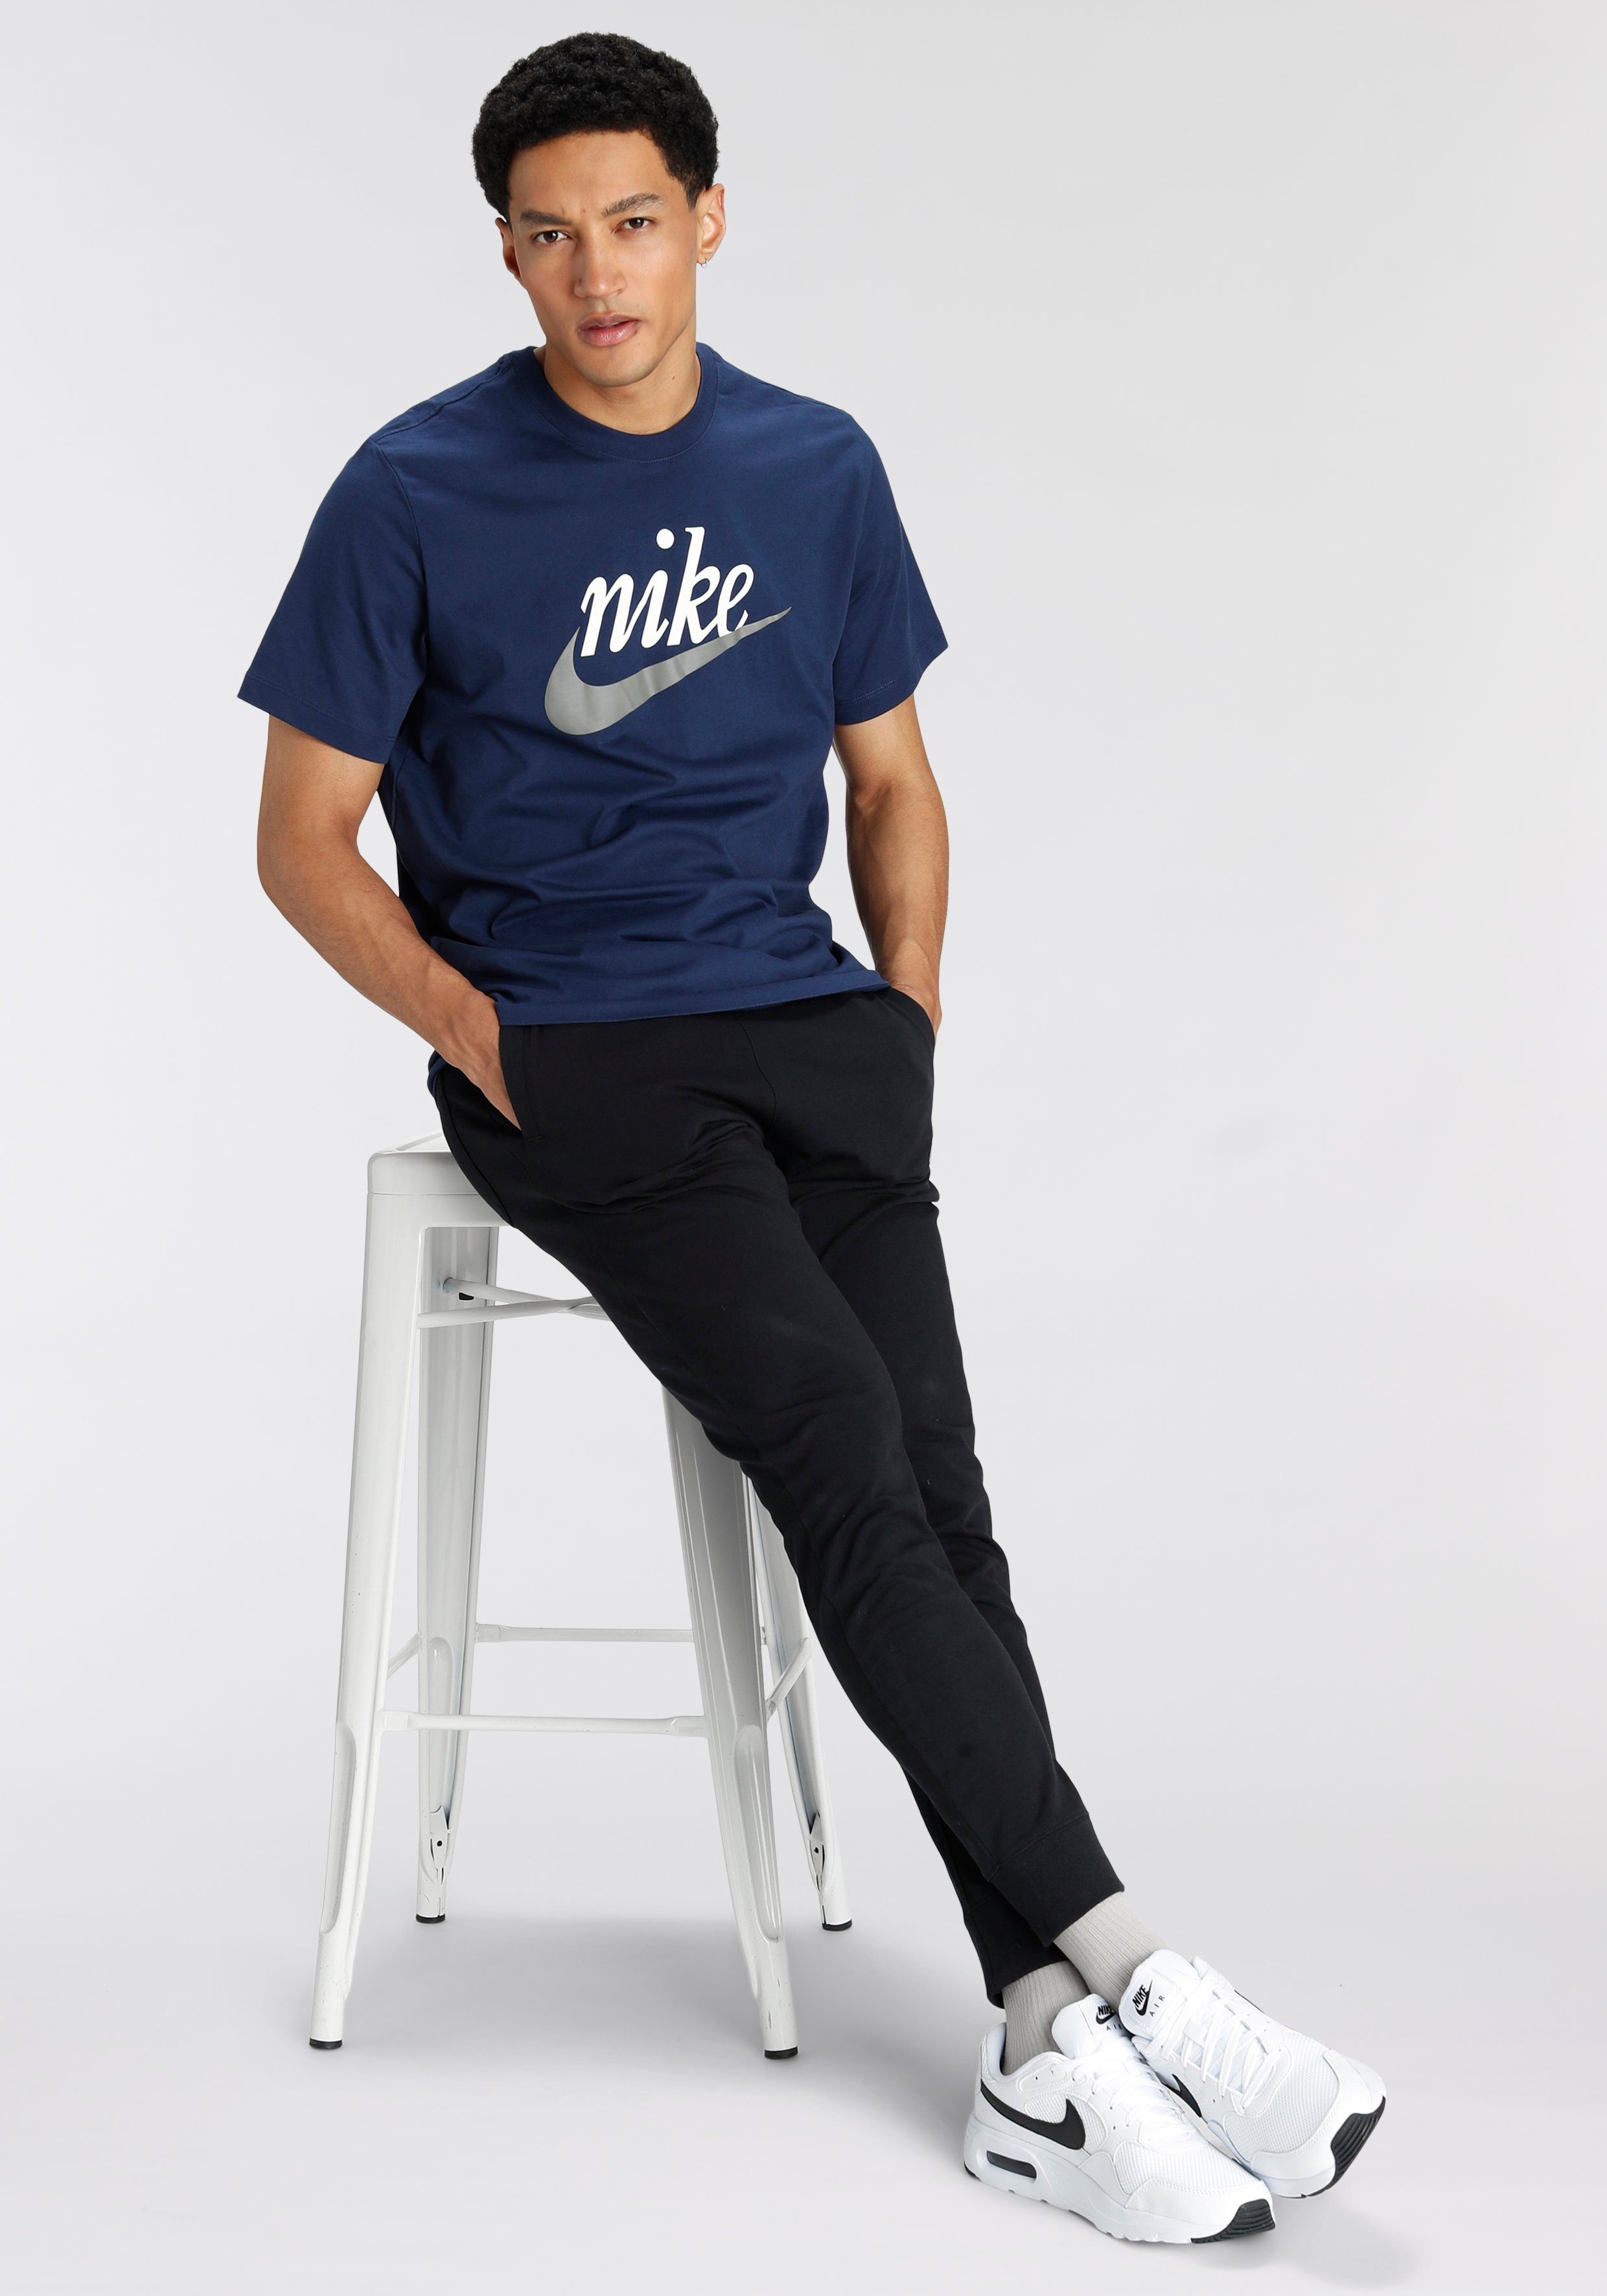 Nike NAVY MIDNIGHT Men's Sportswear T-Shirt T-Shirt